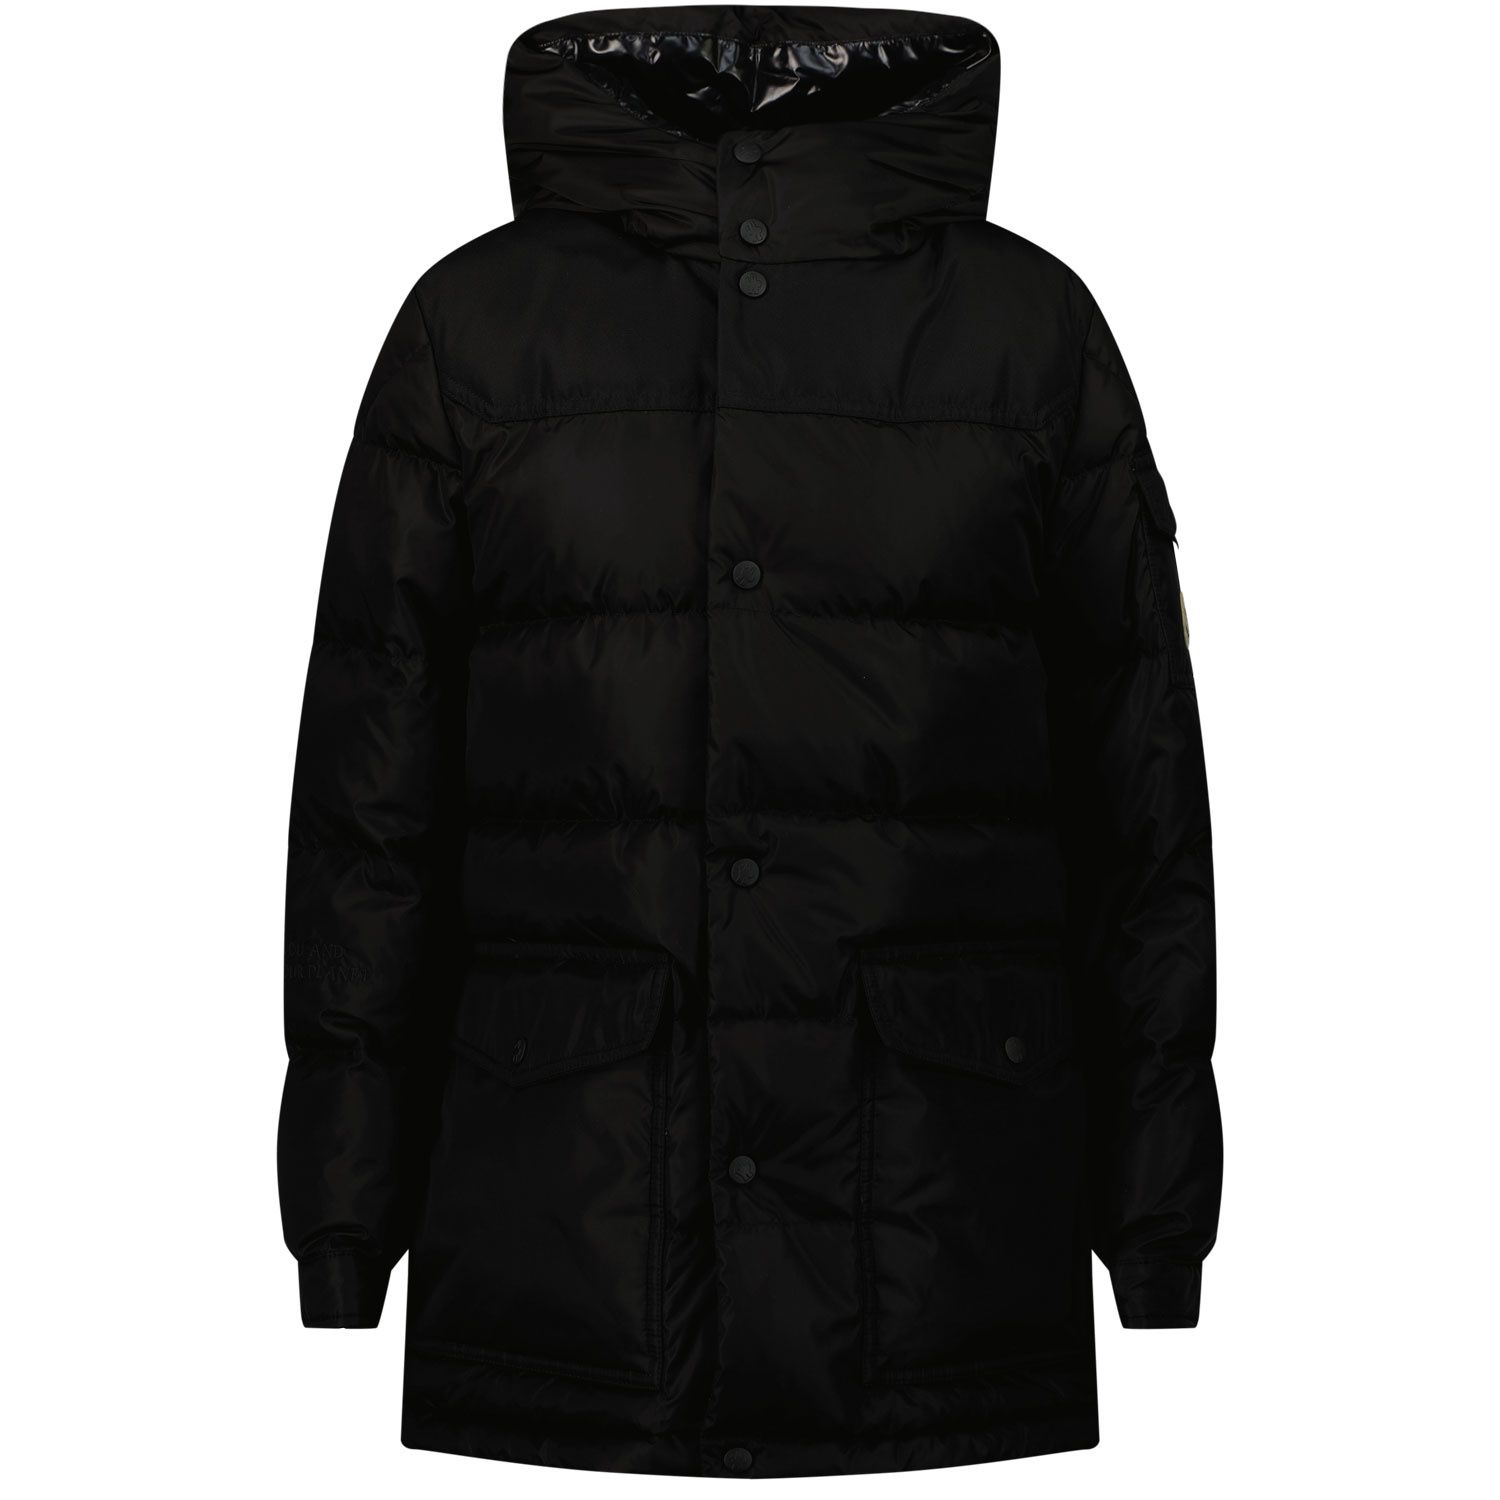 Picture of Moncler 1A00097 kids jacket black